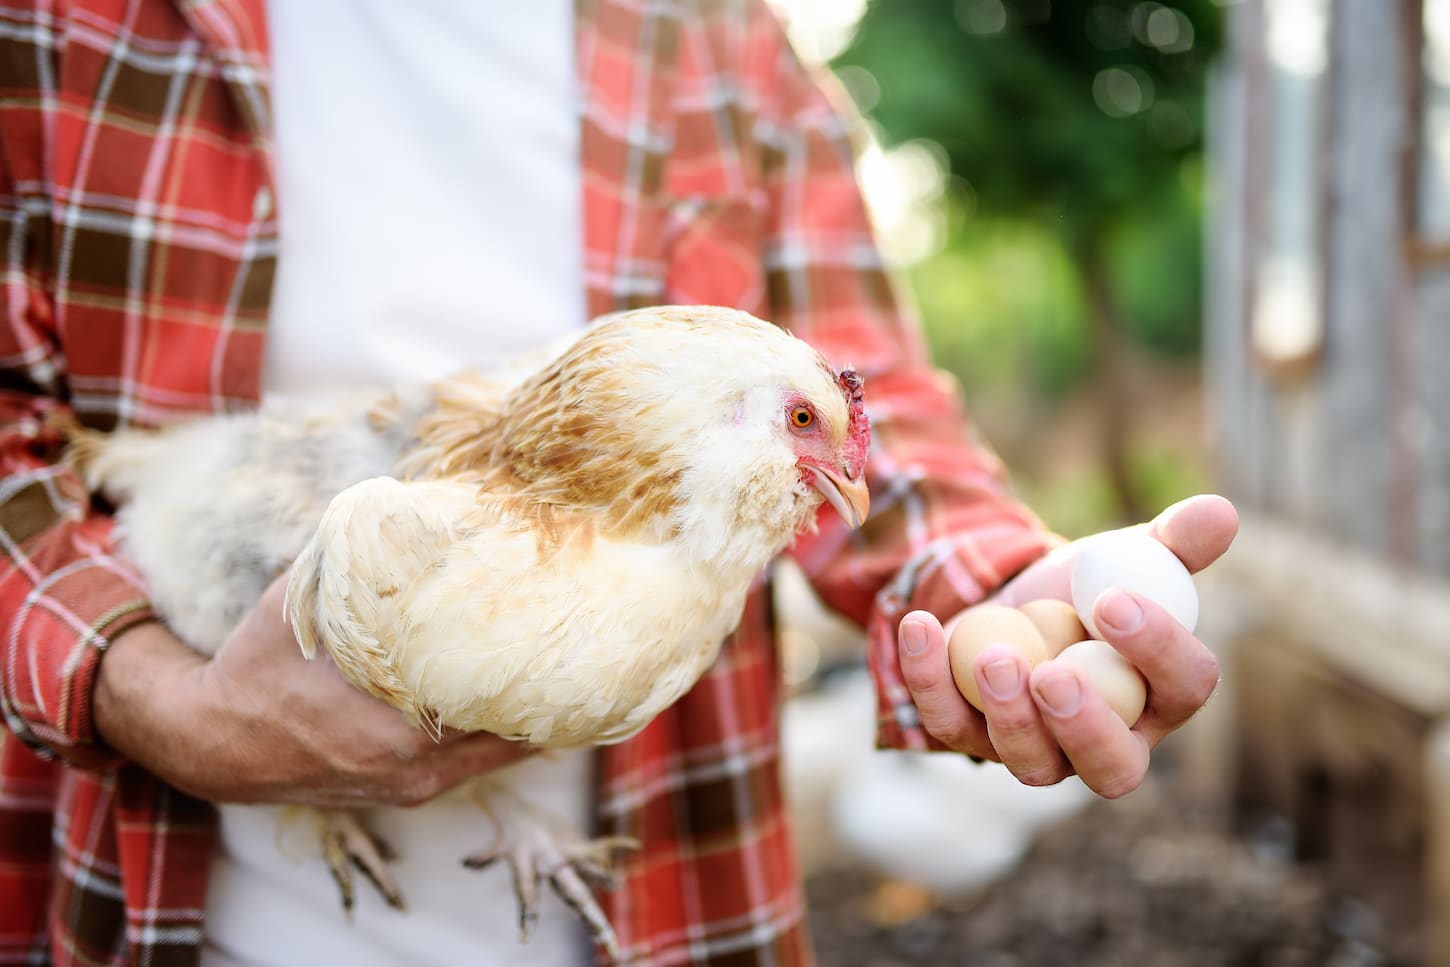 An image of a Farmer collecting fresh organic eggs on a chicken farm.